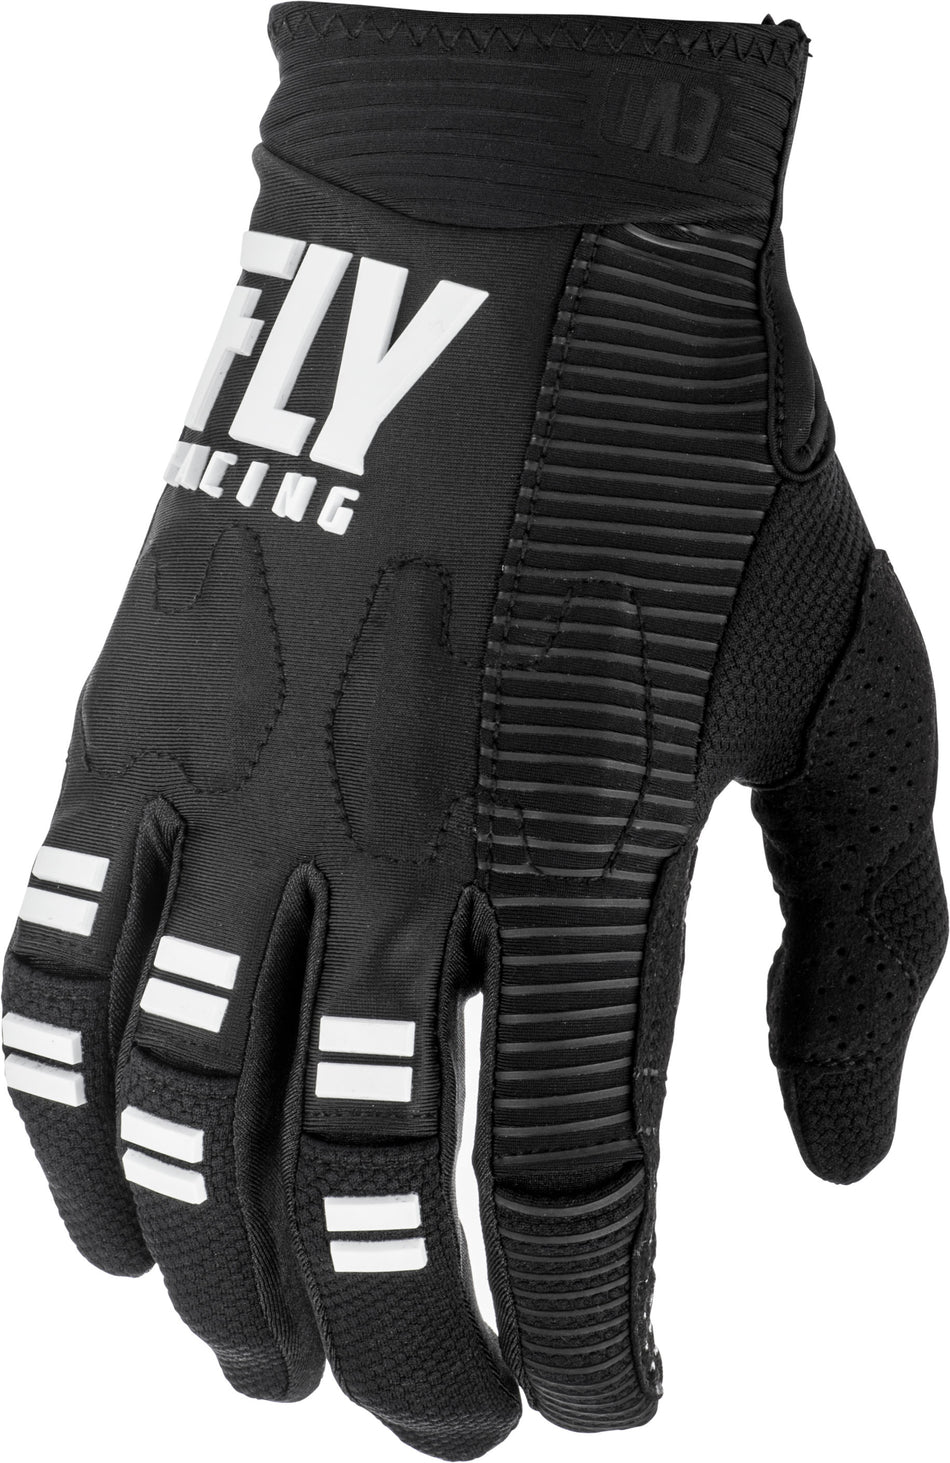 FLY RACING Evolution Dst Gloves Black/White Sz 09 372-11009